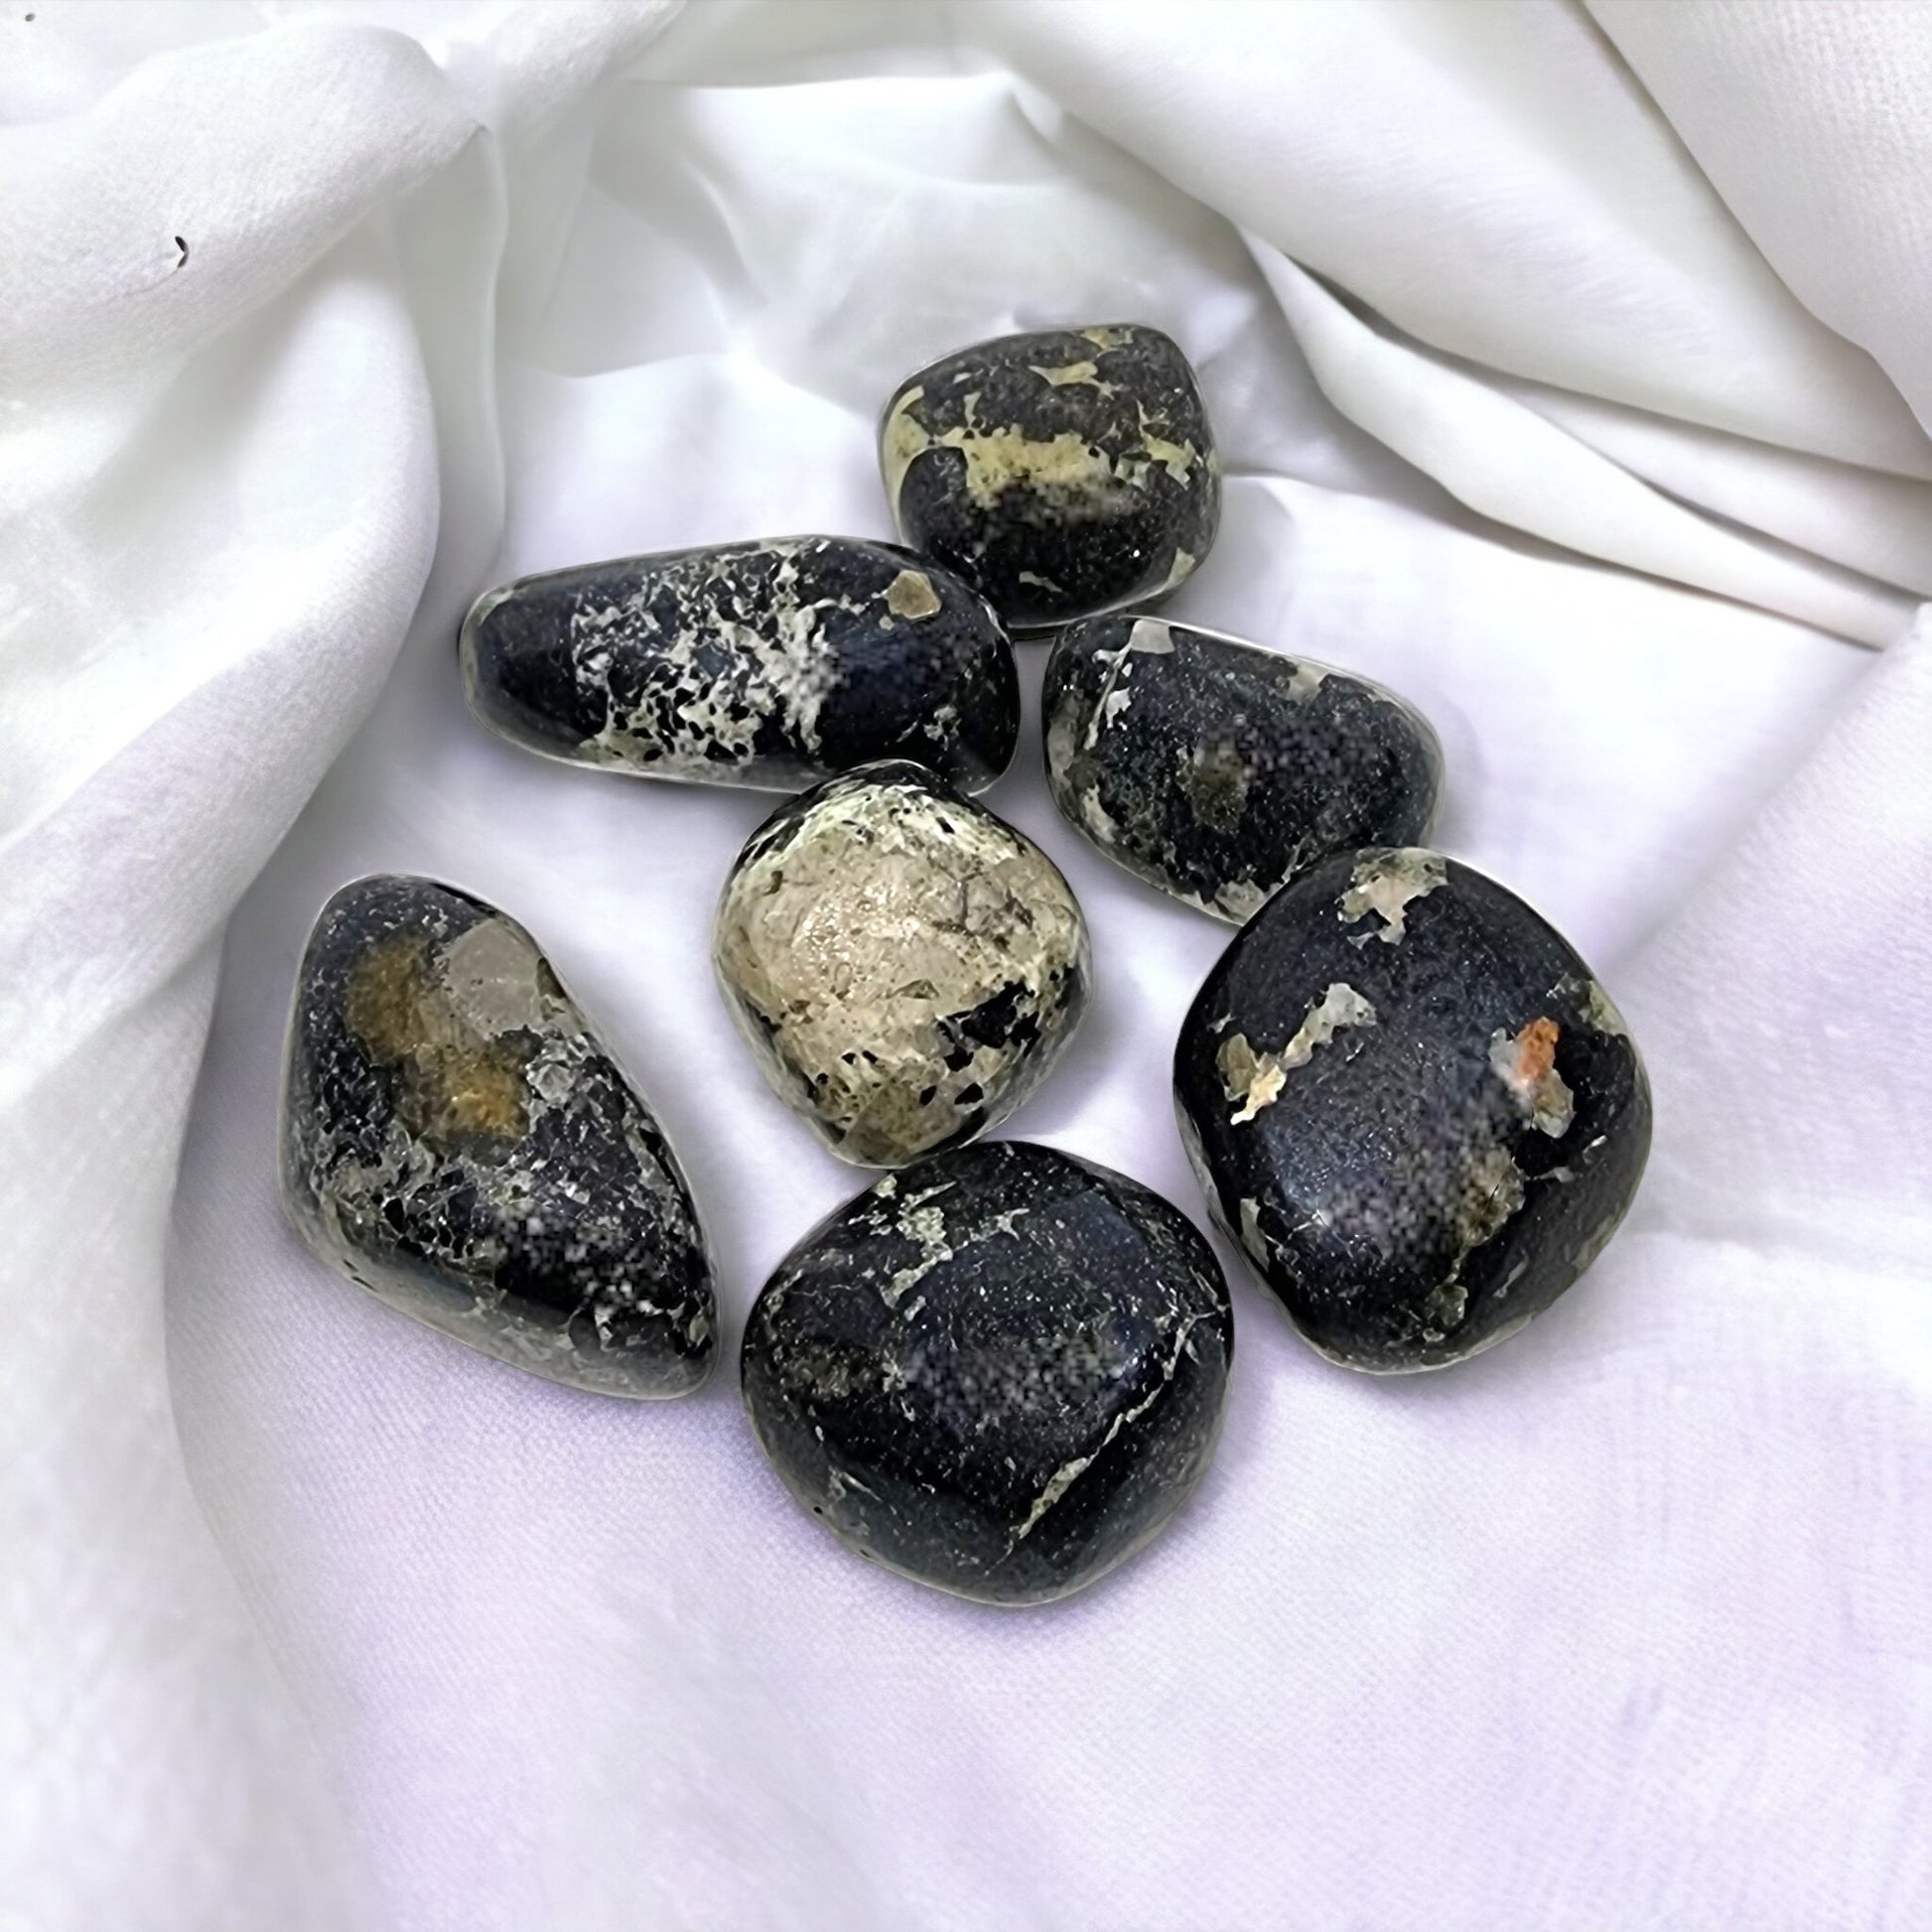 Covellite crystal tumbles with striking black quartz and crystal matrix taken in salt rooms dubbo